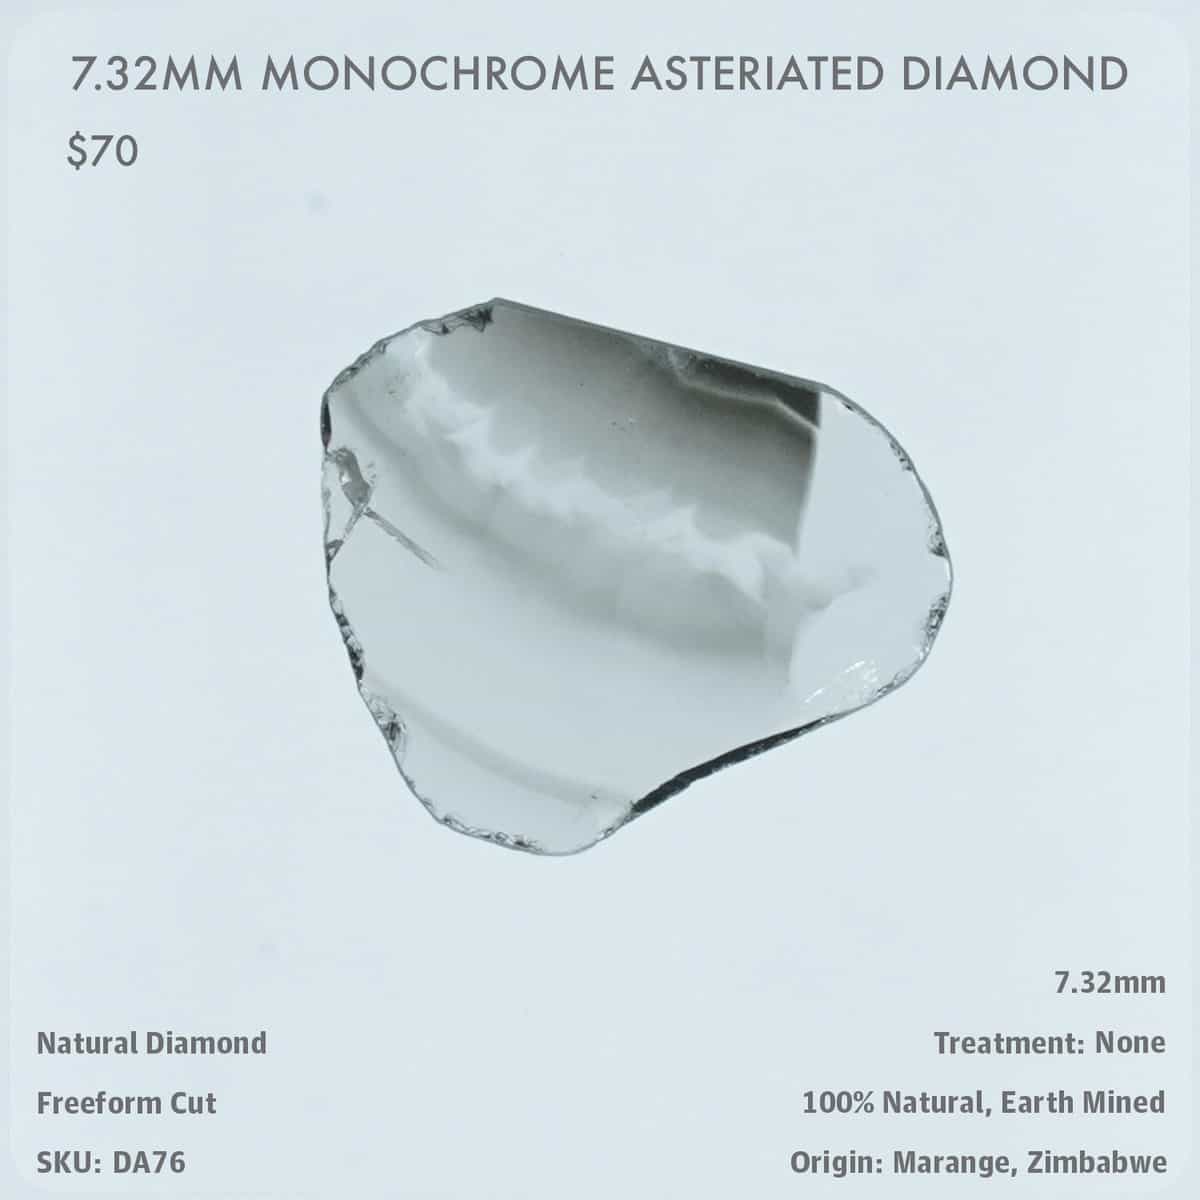 7.32mm Monochrome Asteriated Diamond